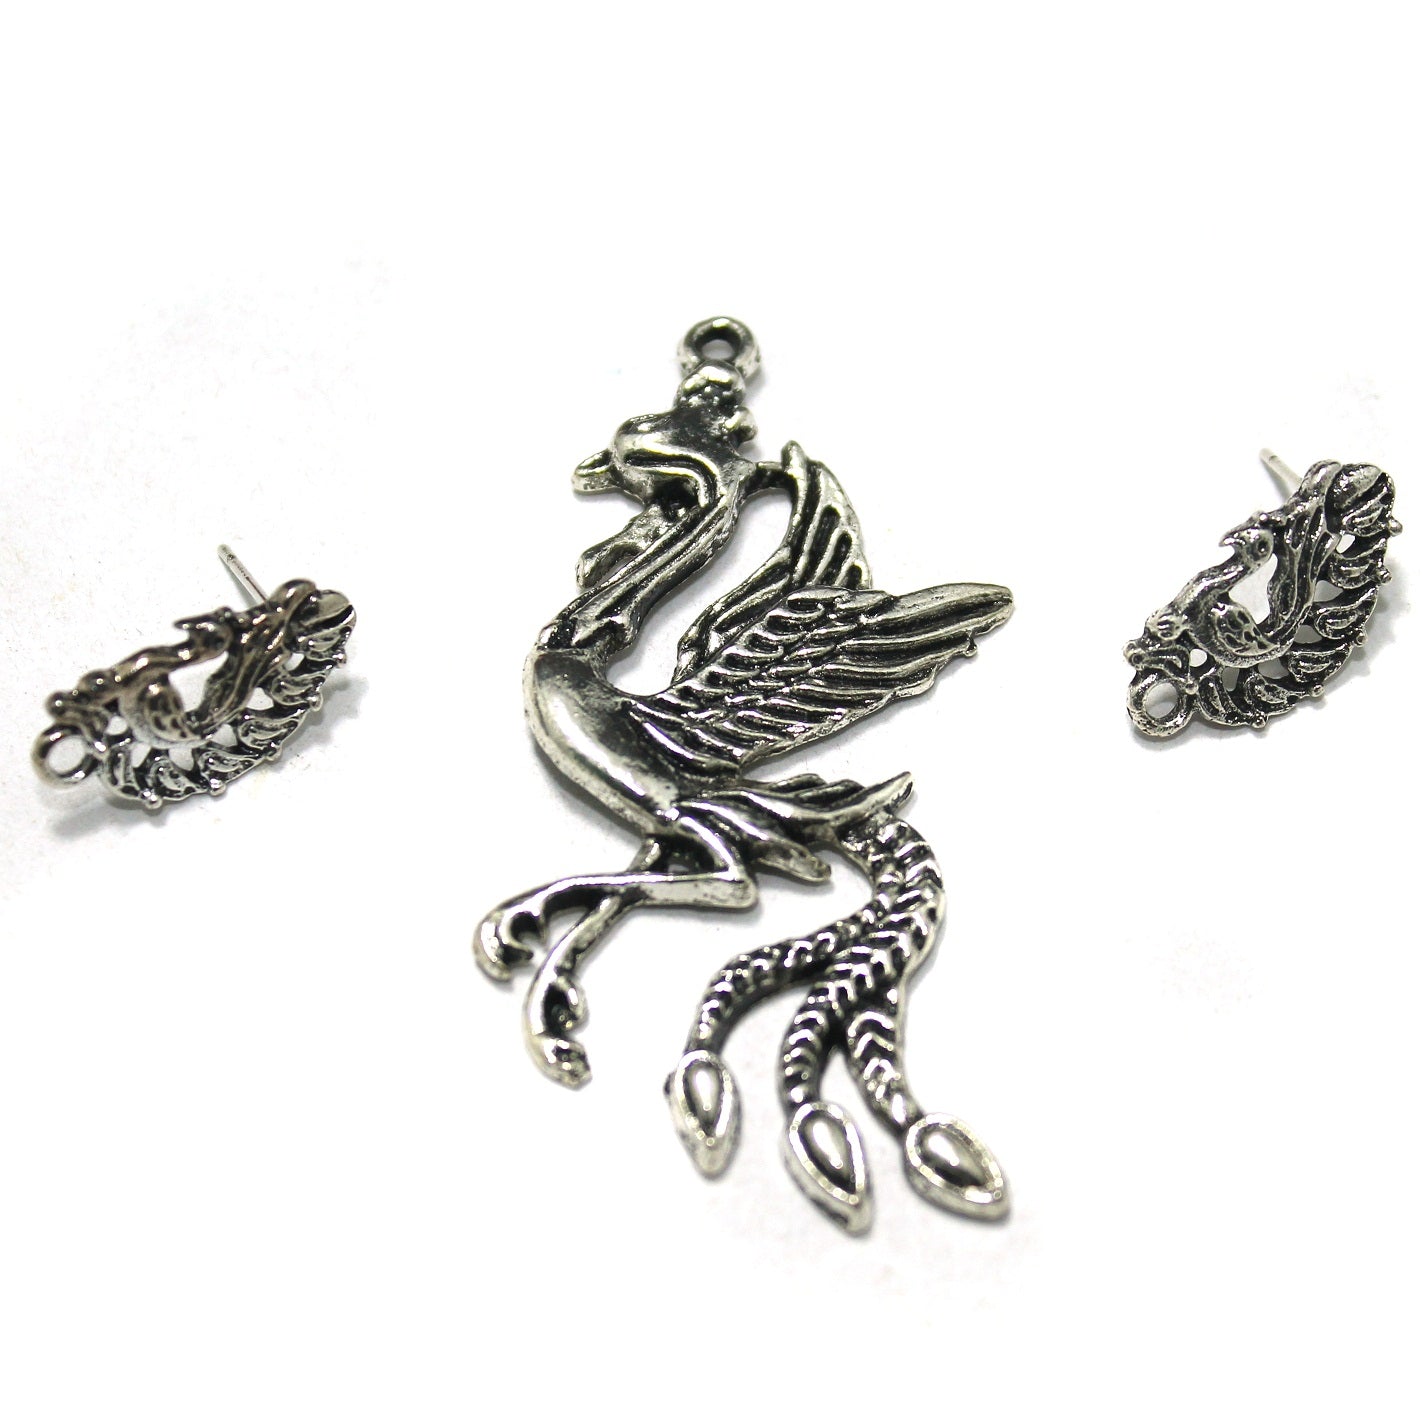 1 Set, German Silver Peacock Pendant with Earrings